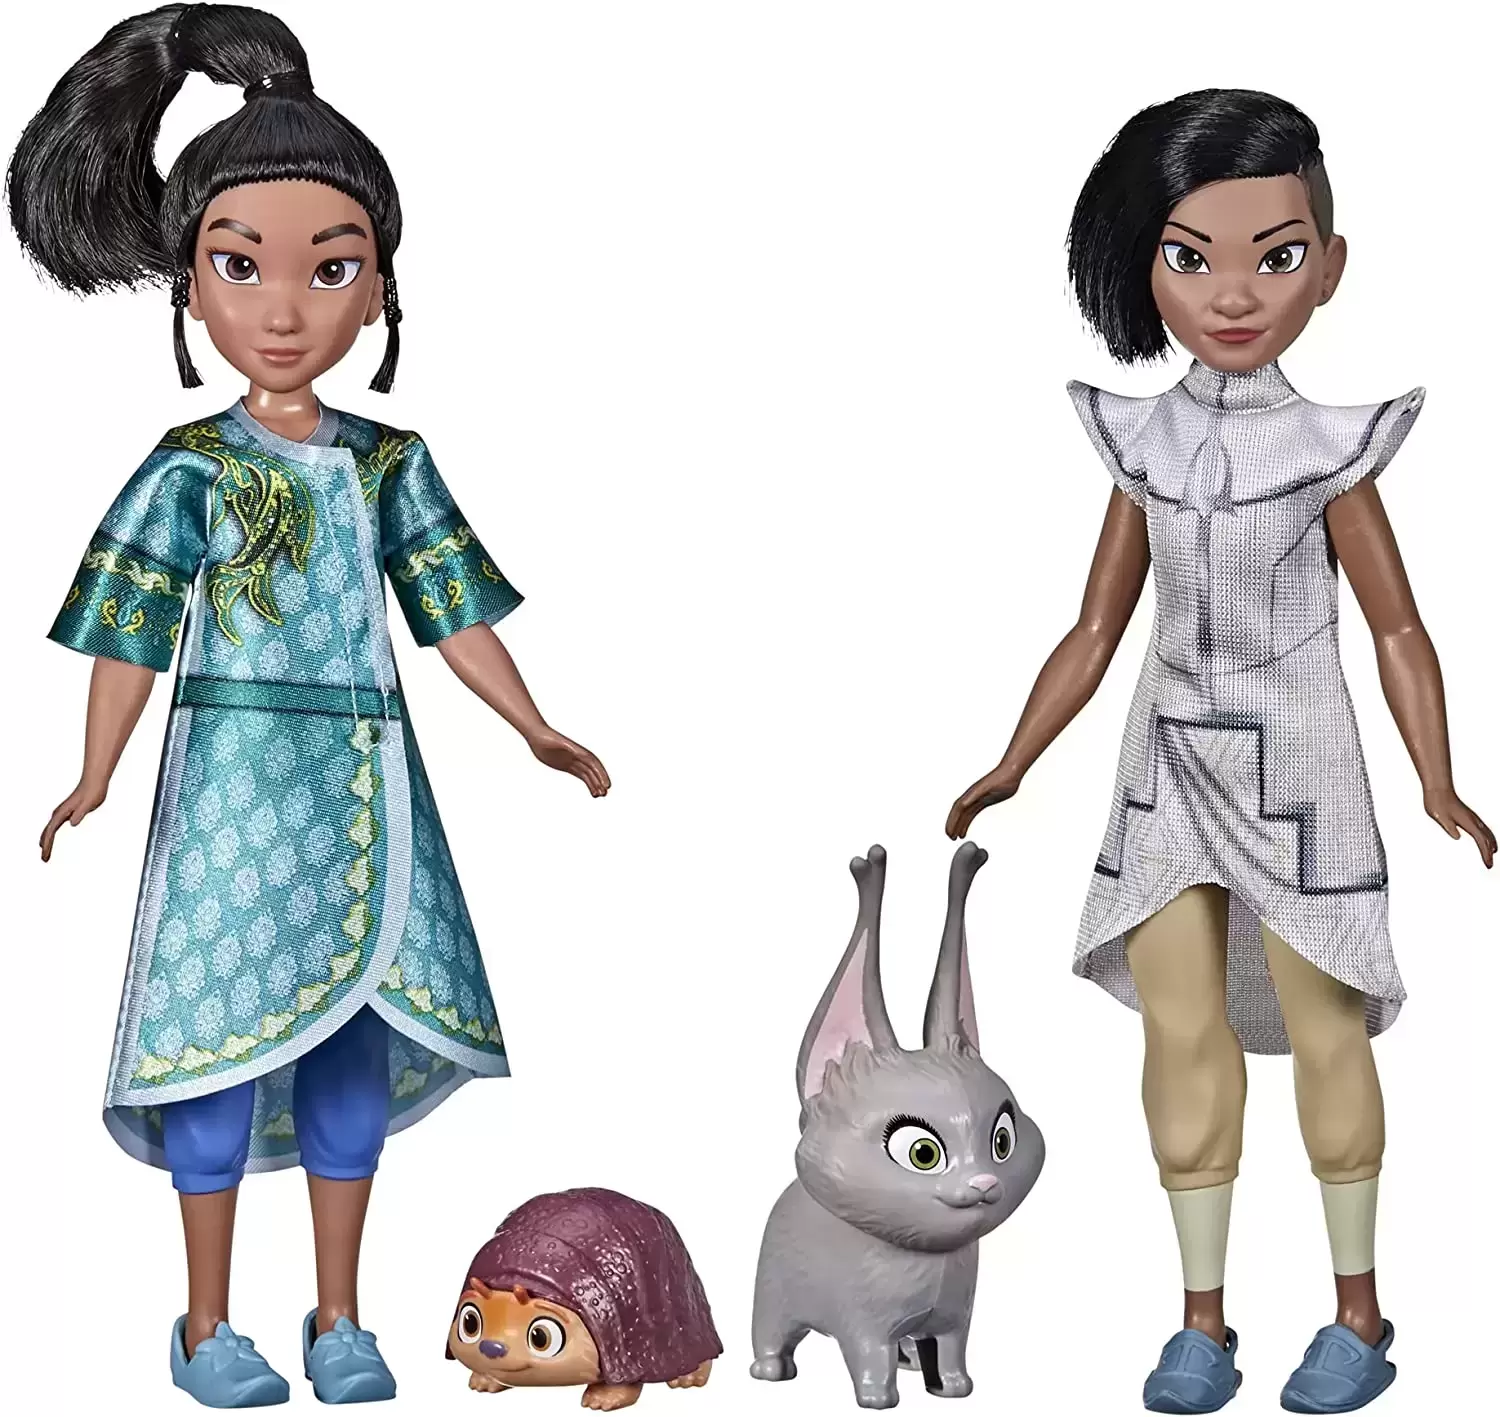 Disney Raya and the Last Dragon Dolls & Playsets - Young Raya and Namaari Dolls